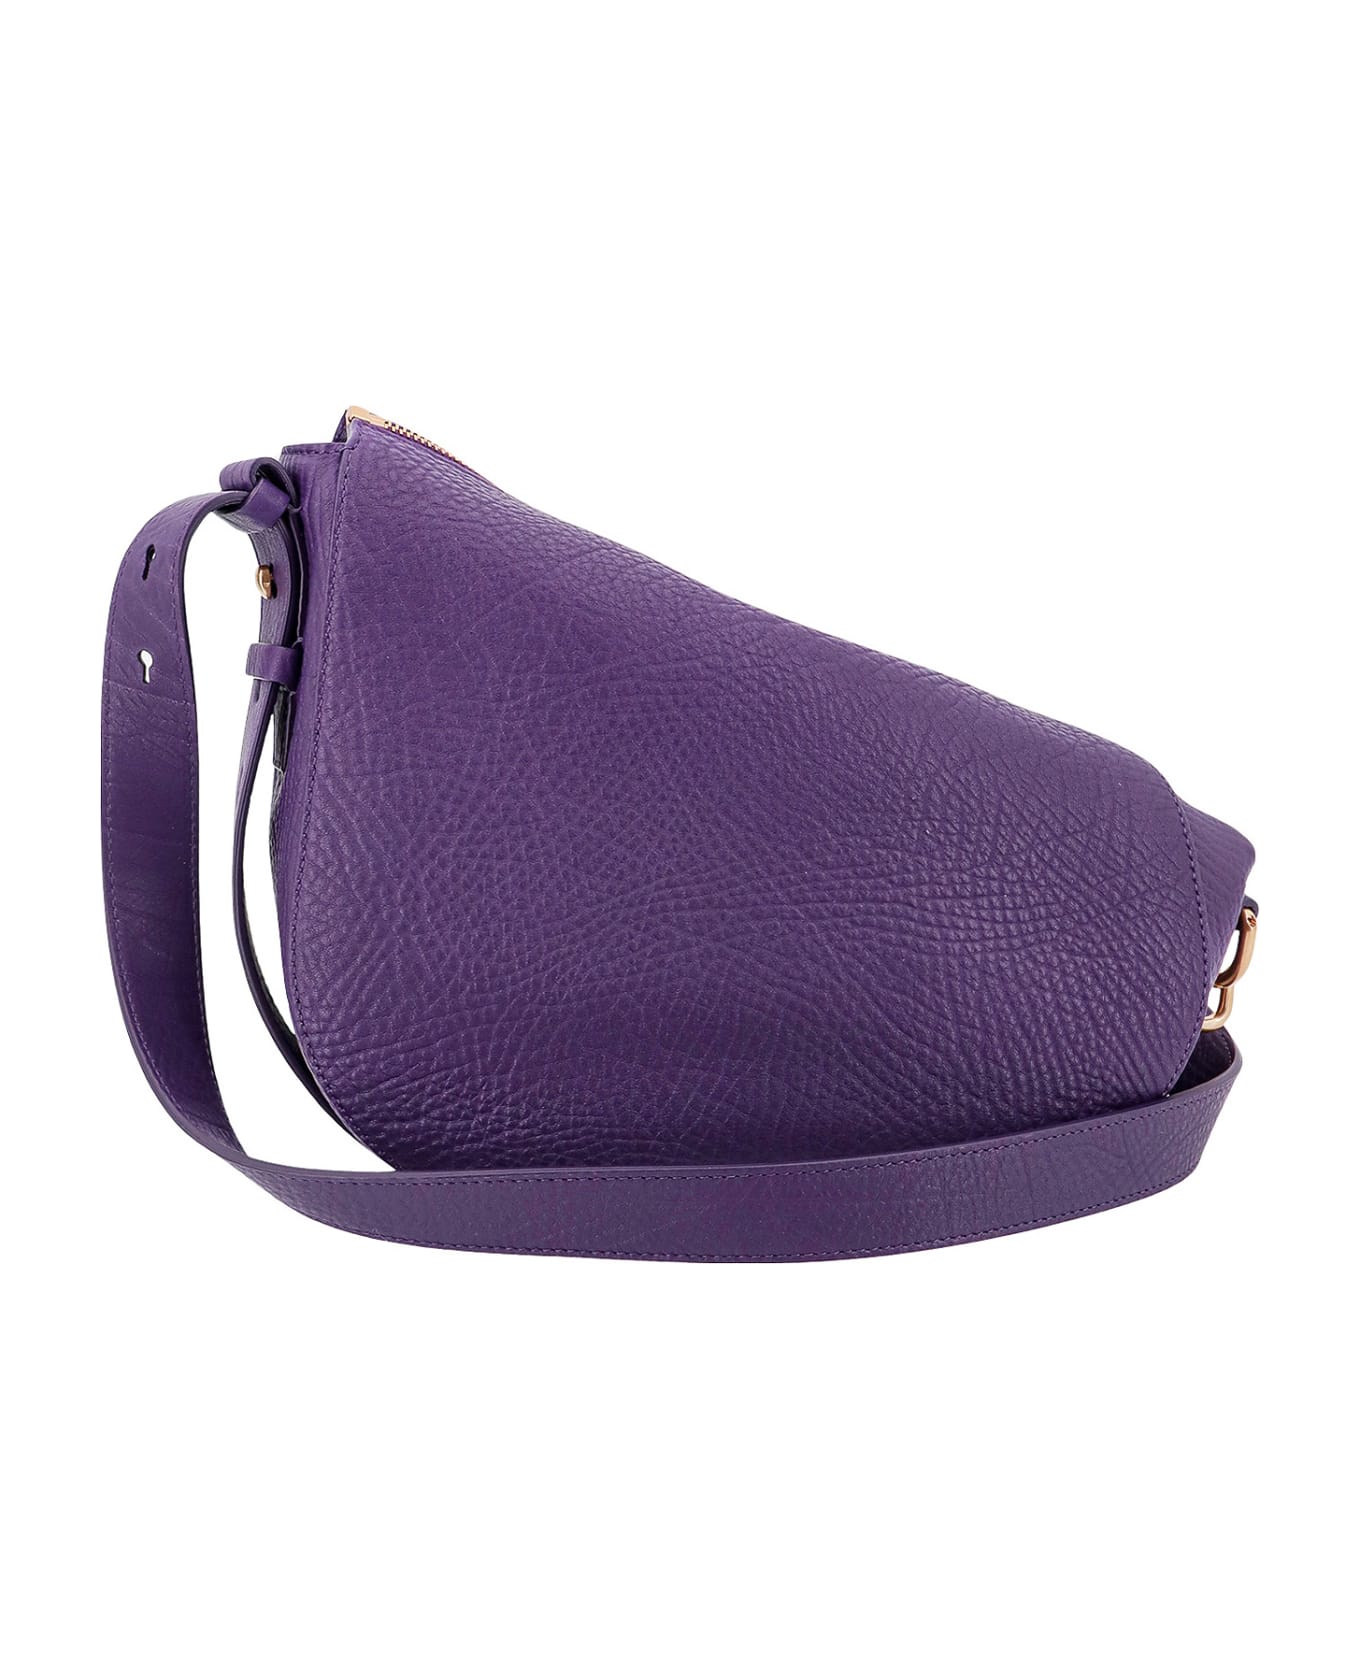 Burberry Knight Shoulder Bag - Purple